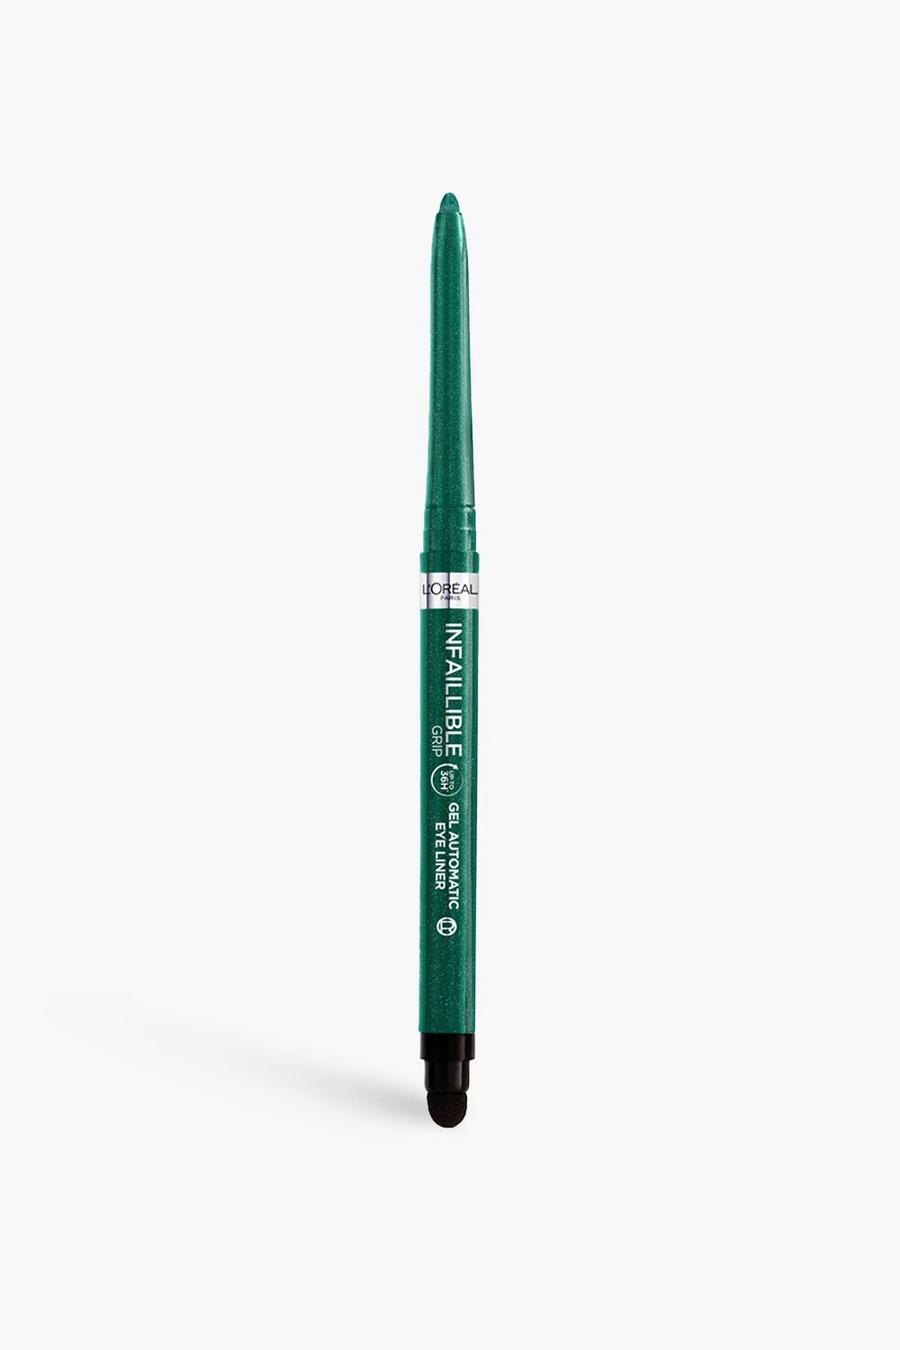 L'Oreal Paris - Eyeliner Infaillible Grip - Tenue 36h, Green vert